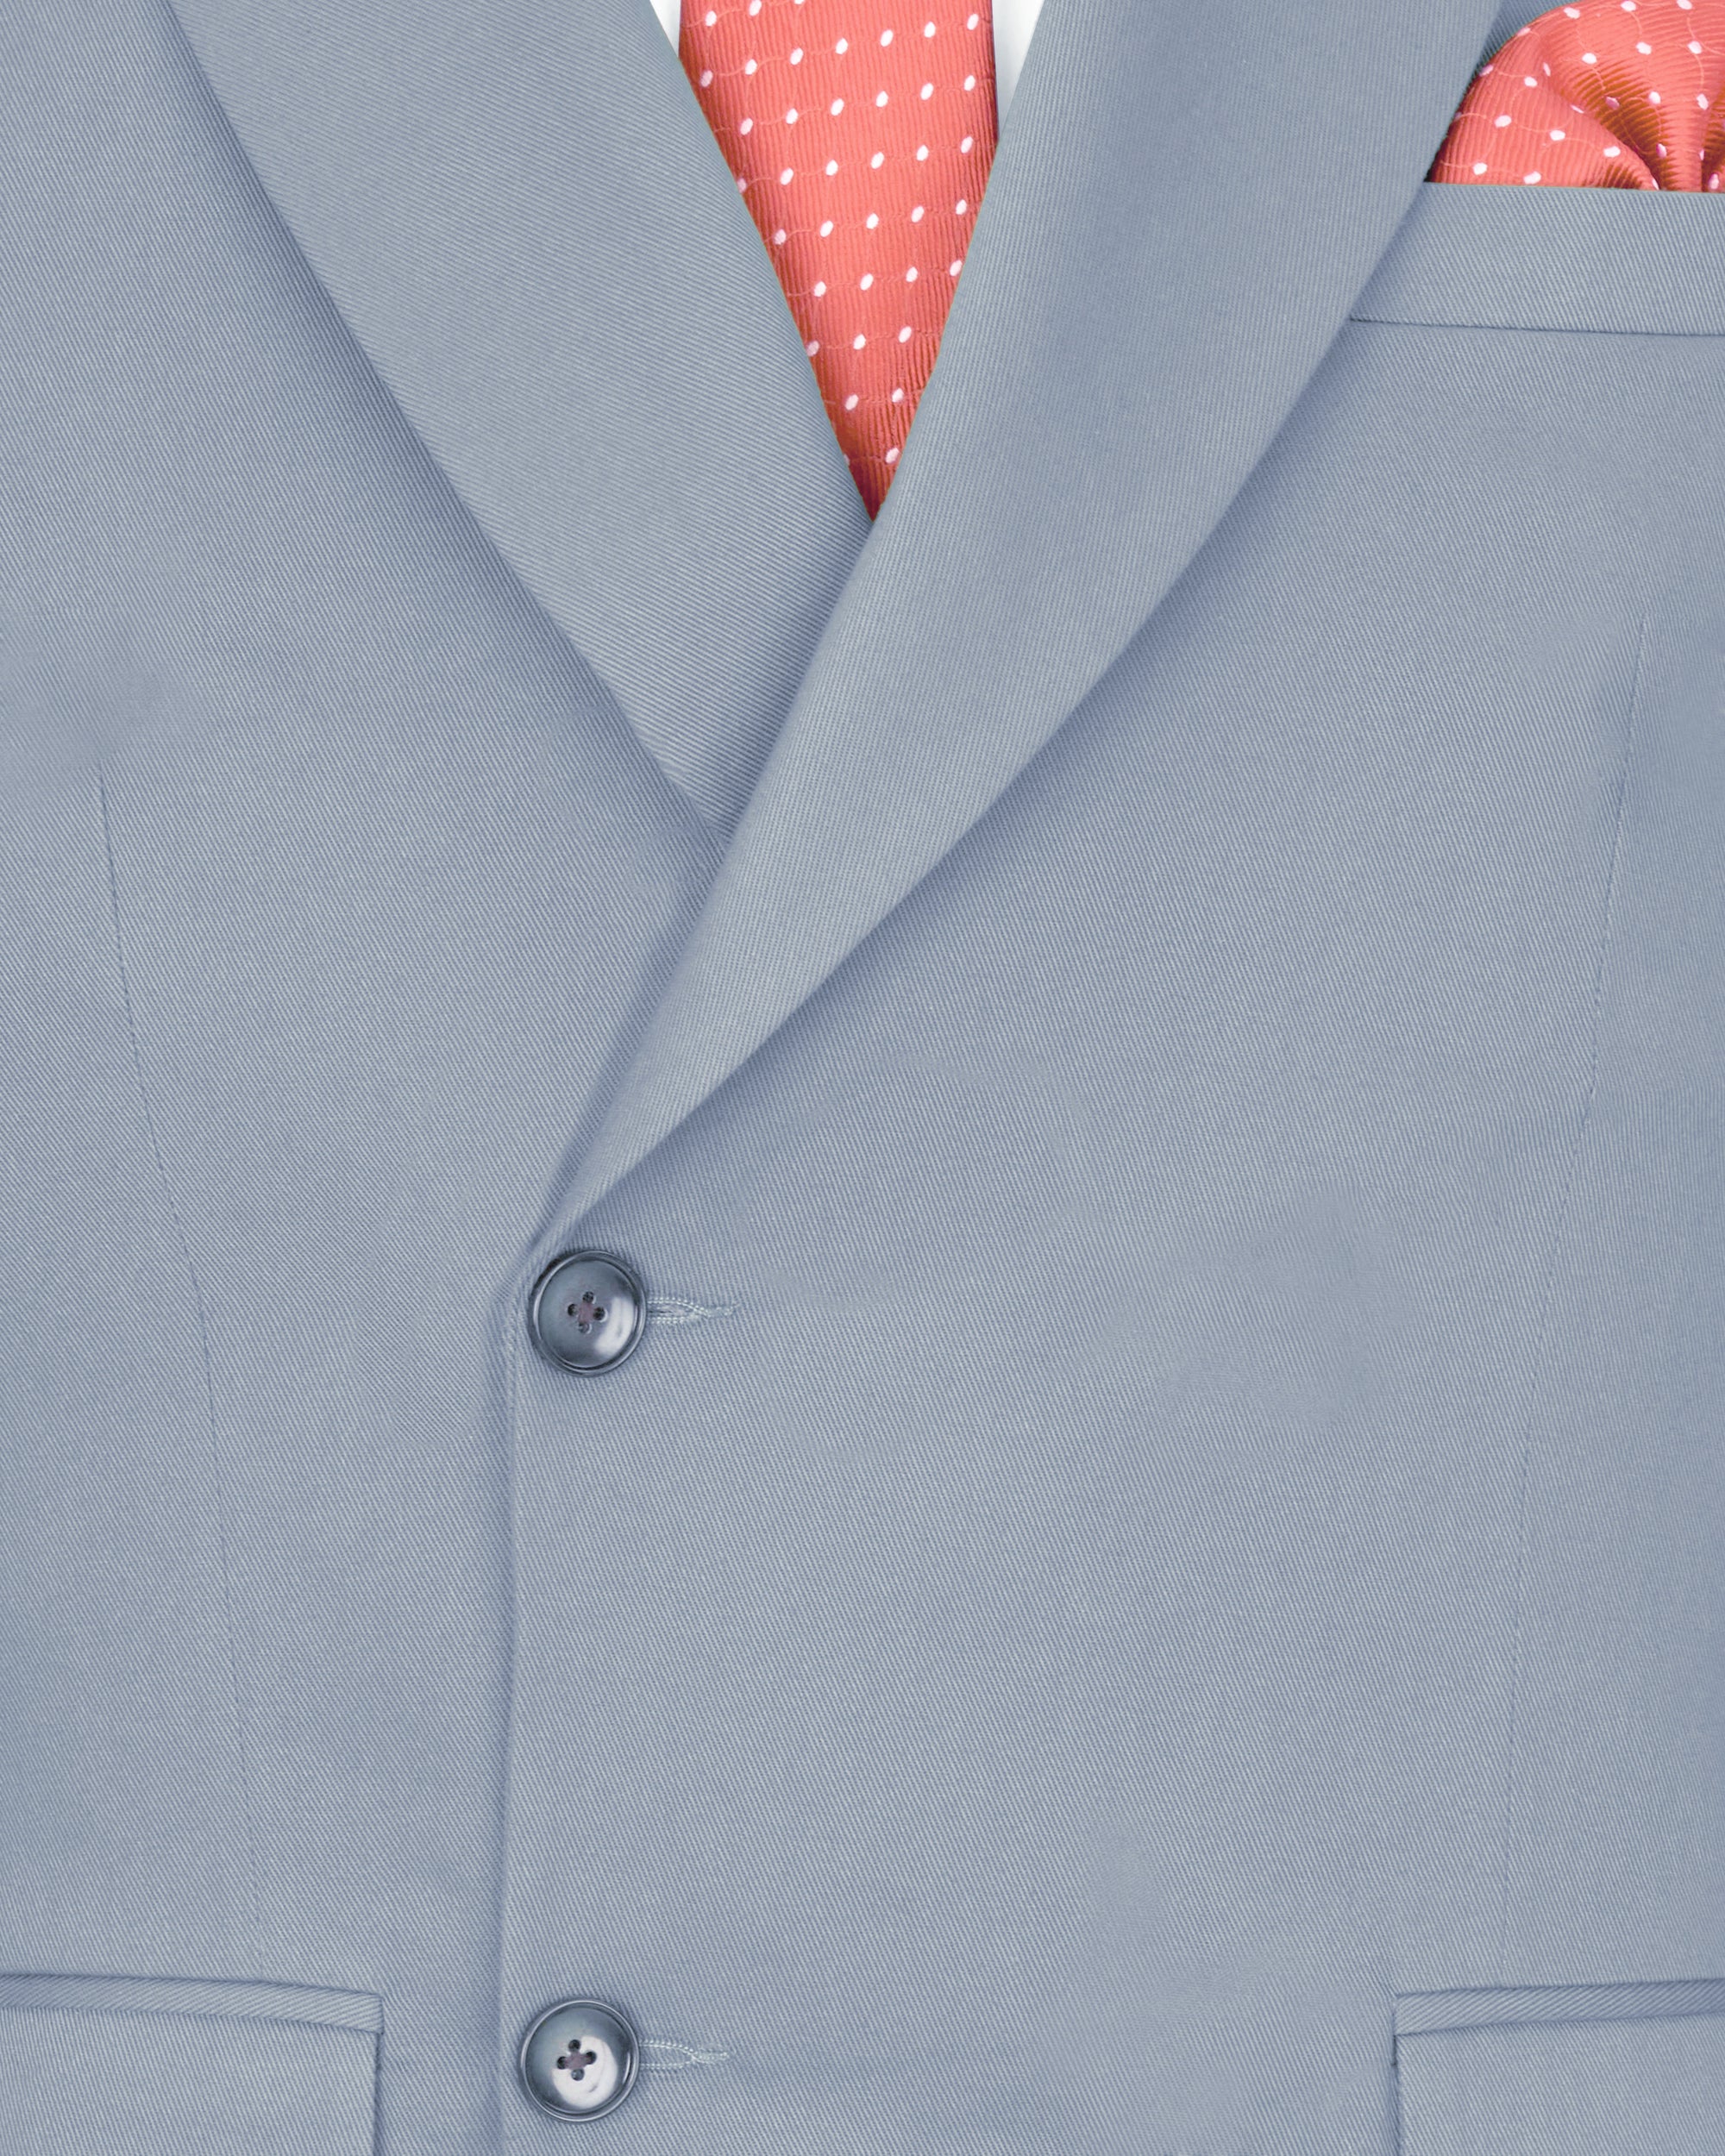 Tealish Blue Tweed Double-Breasted Premium Blazer